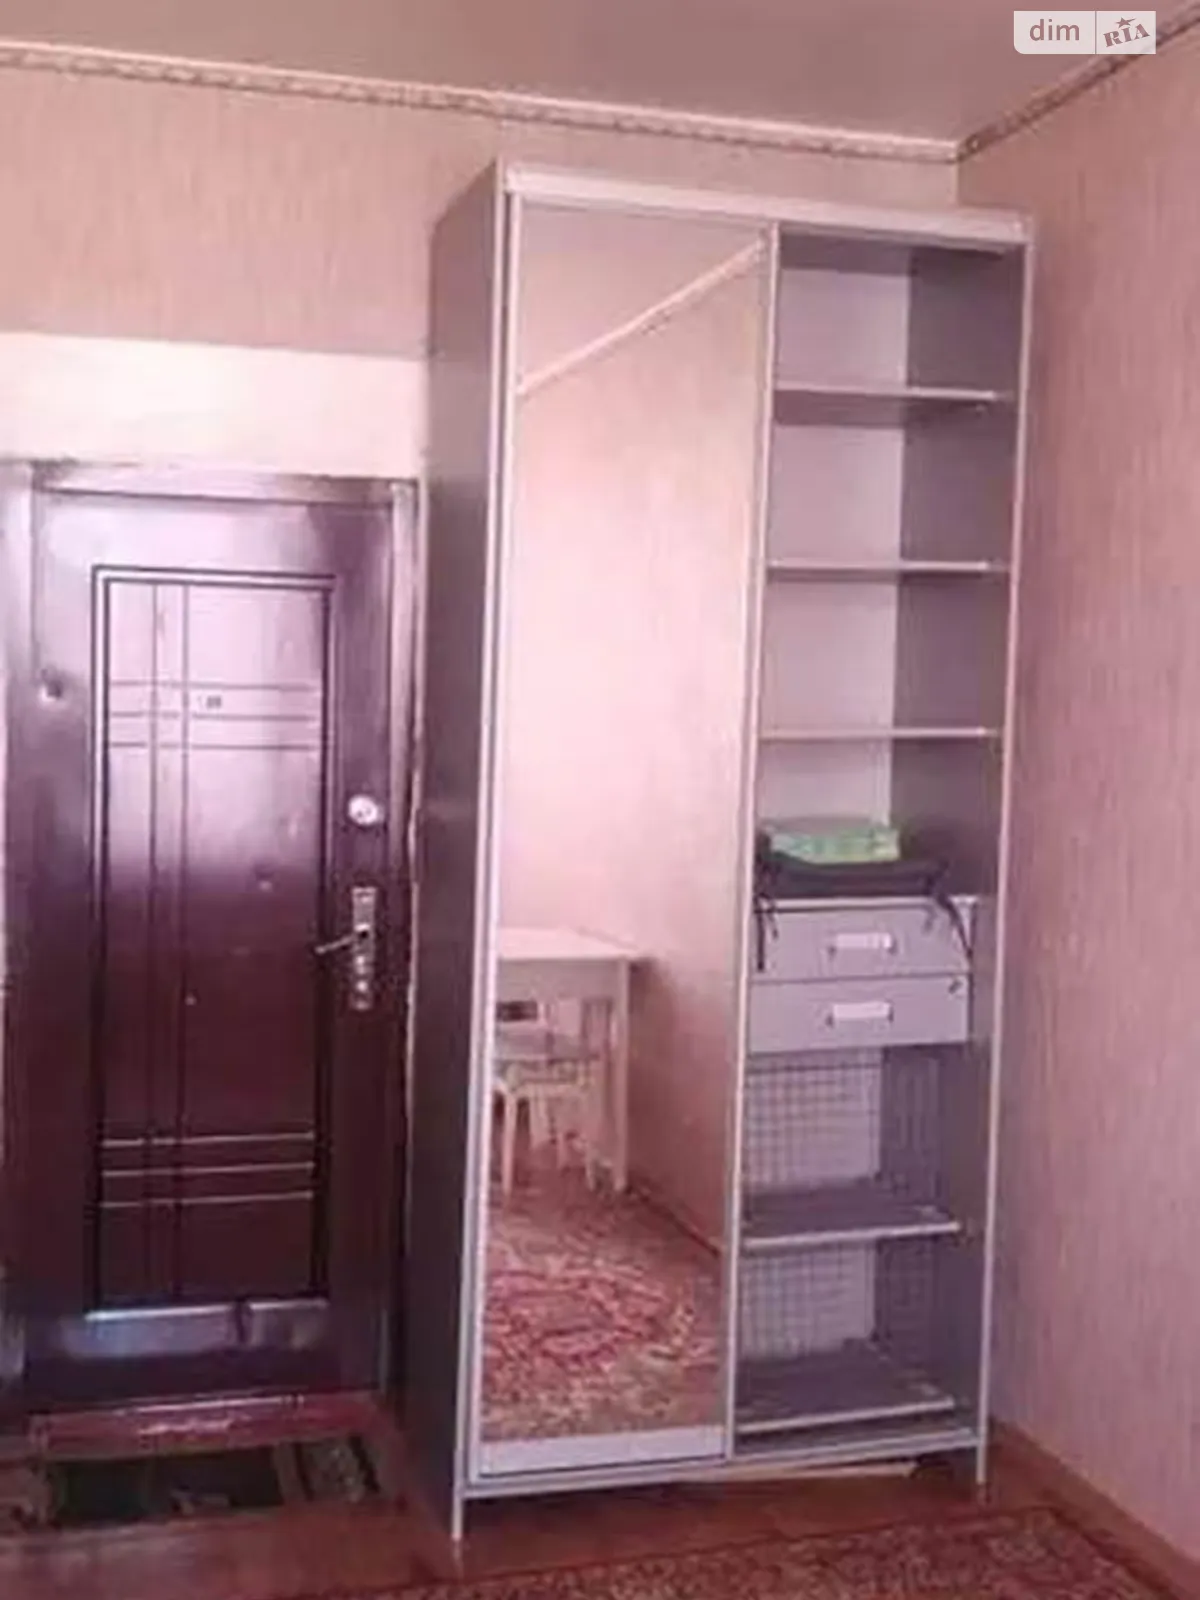 Продается комната 25 кв. м в Киеве, цена: 22000 $ - фото 1